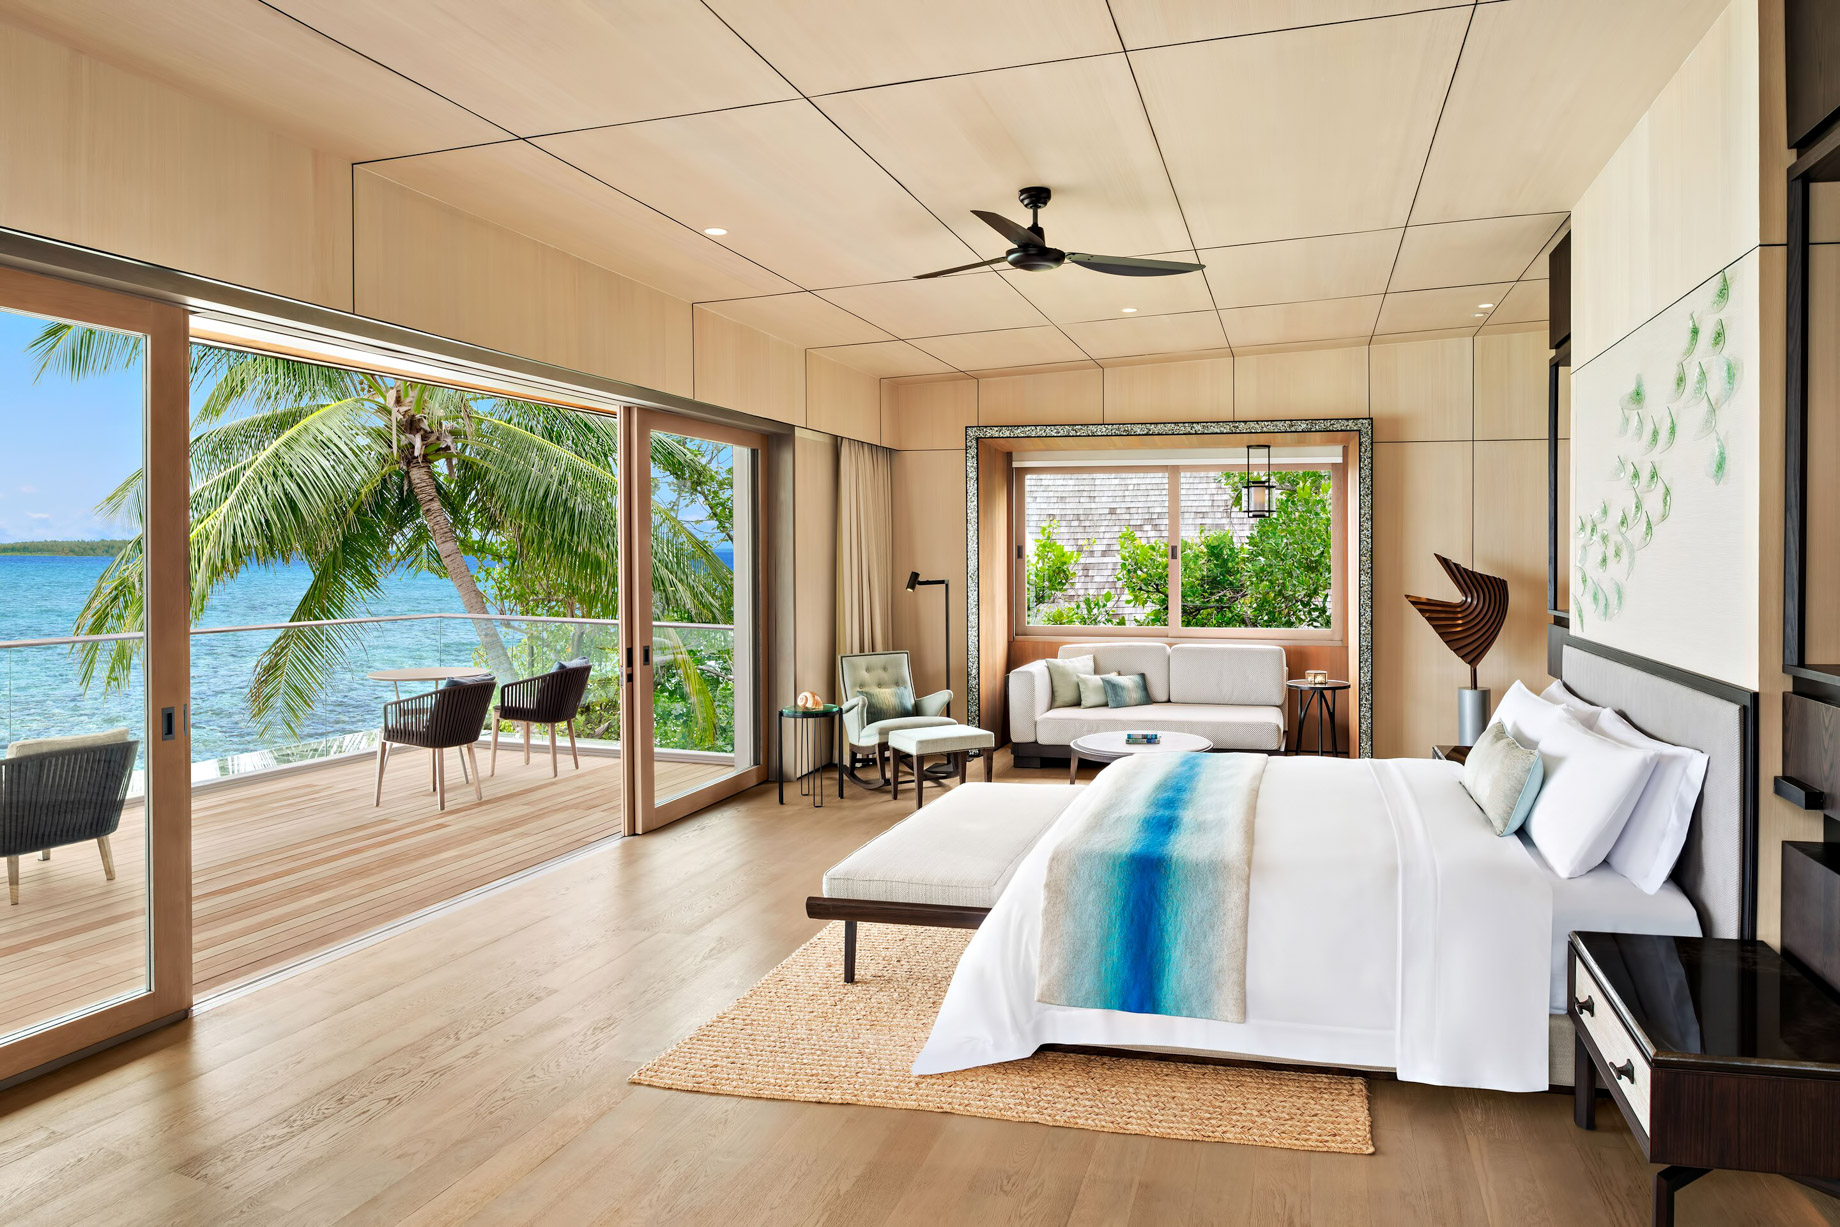 The St. Regis Maldives Vommuli Resort - Dhaalu Atoll, Maldives - King Two Bedroom Beach Suite